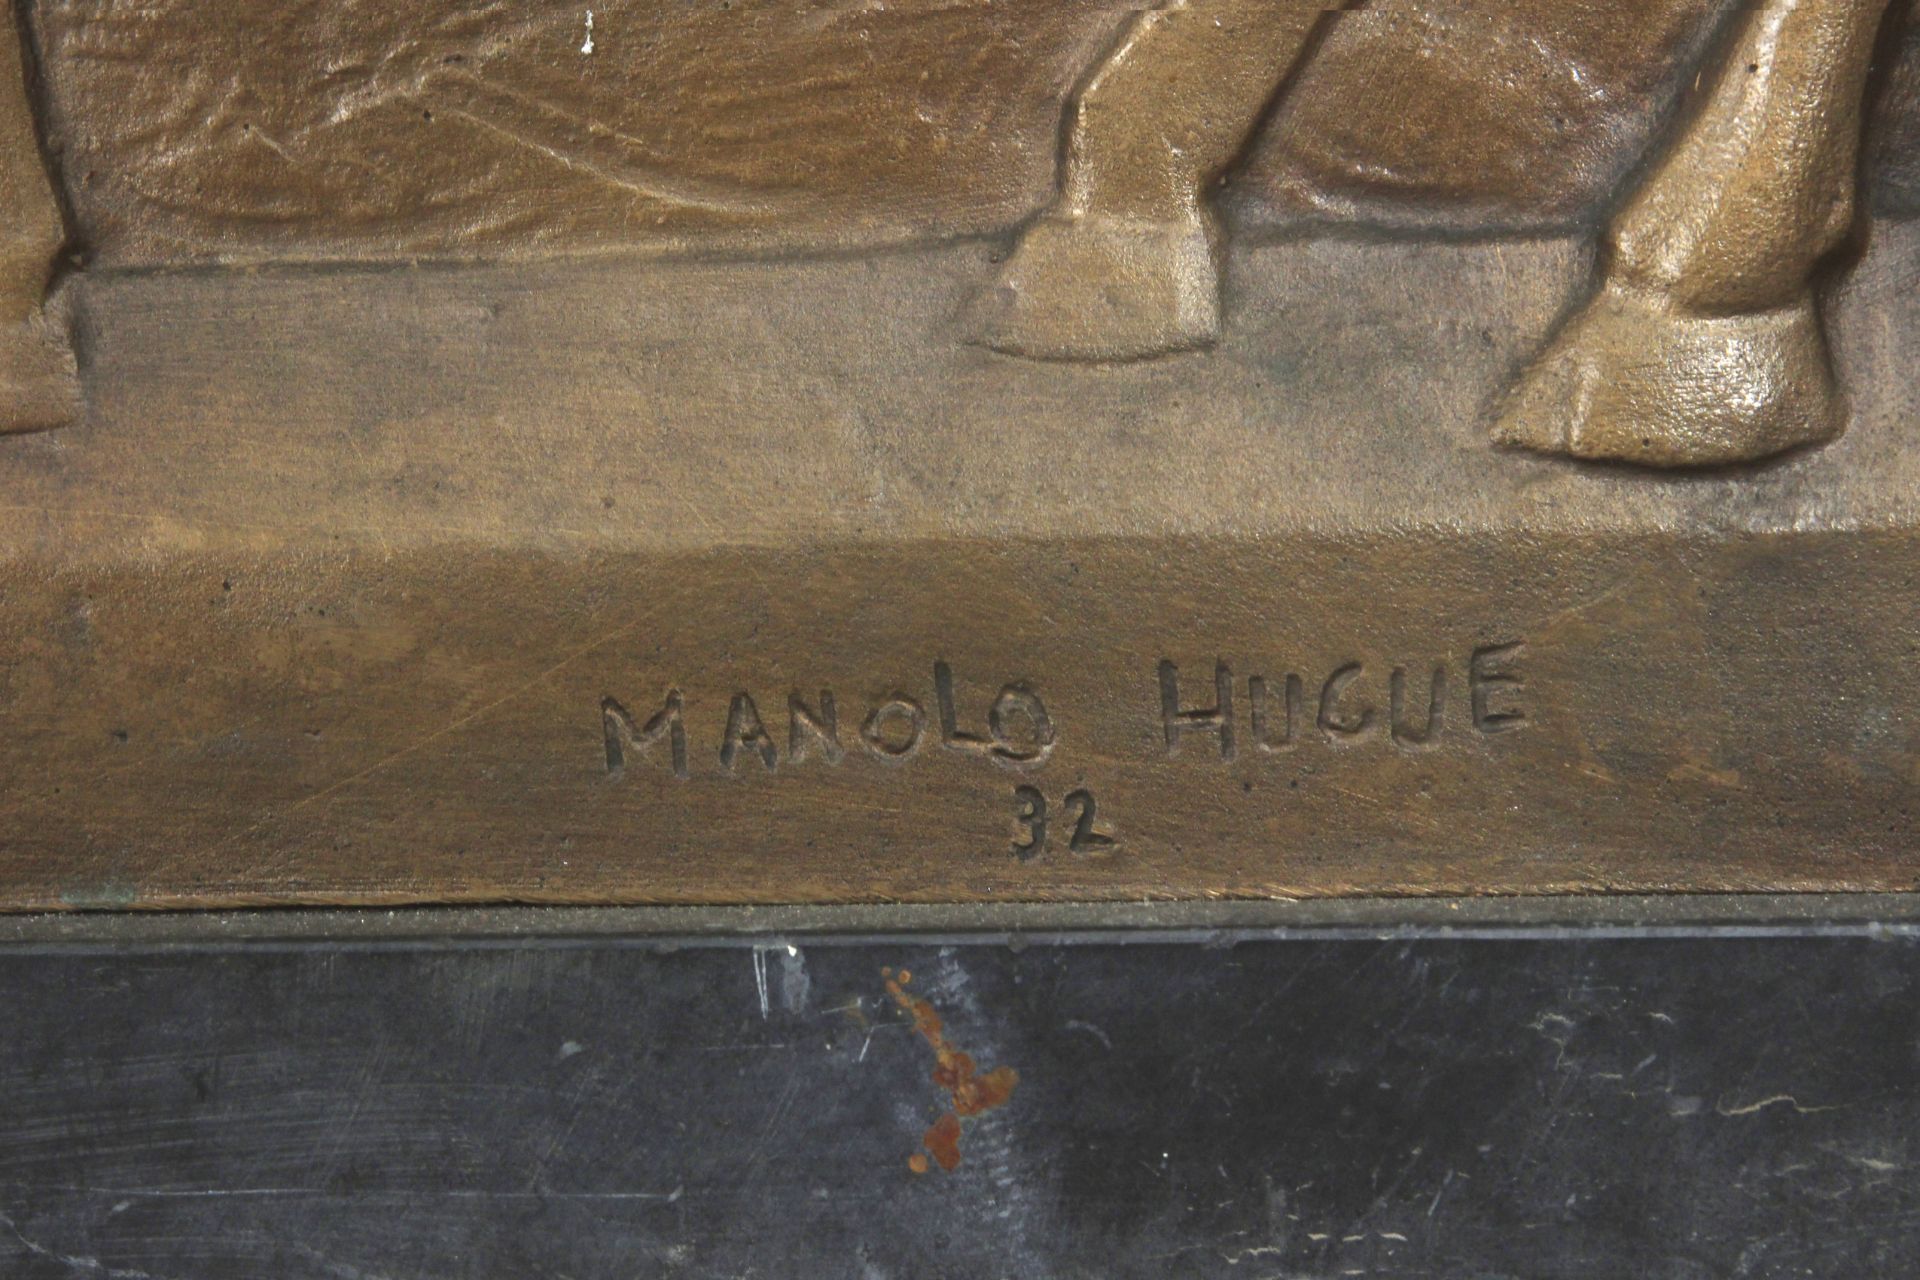 Manolo Hugué - Image 2 of 3